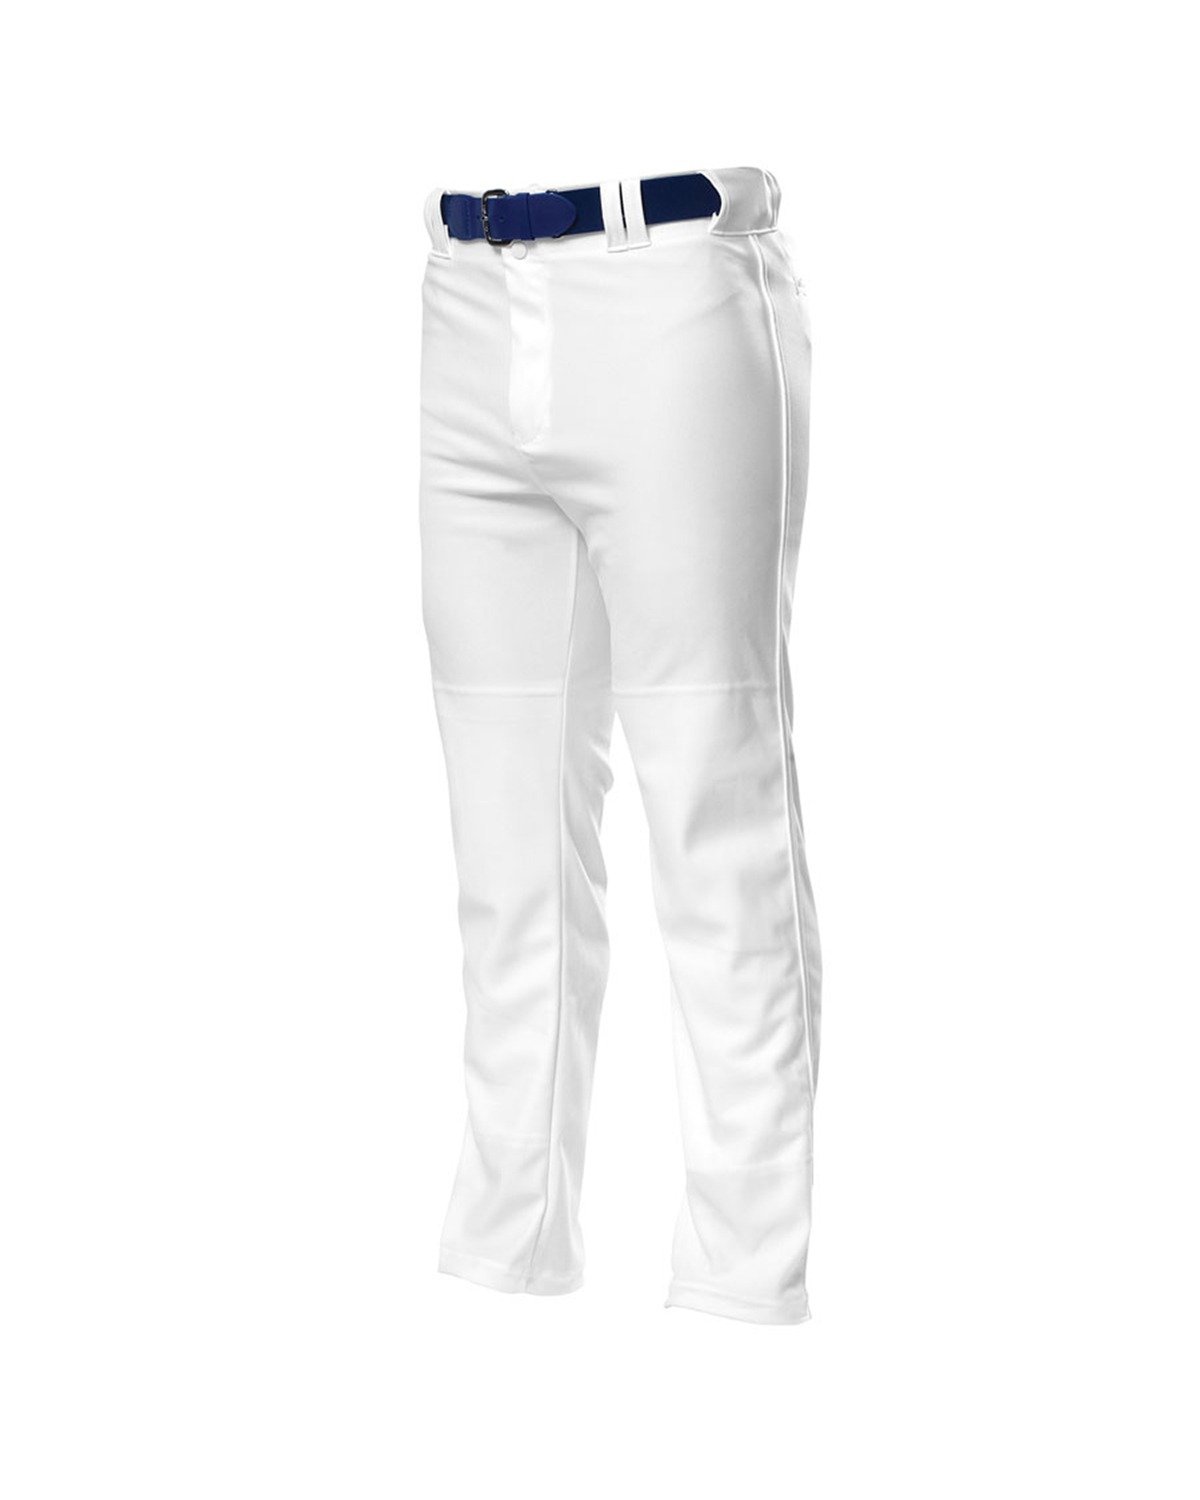 Buy Pro Style Open Bottom Baggy Cut Baseball Pants - A4 Online at Best ...